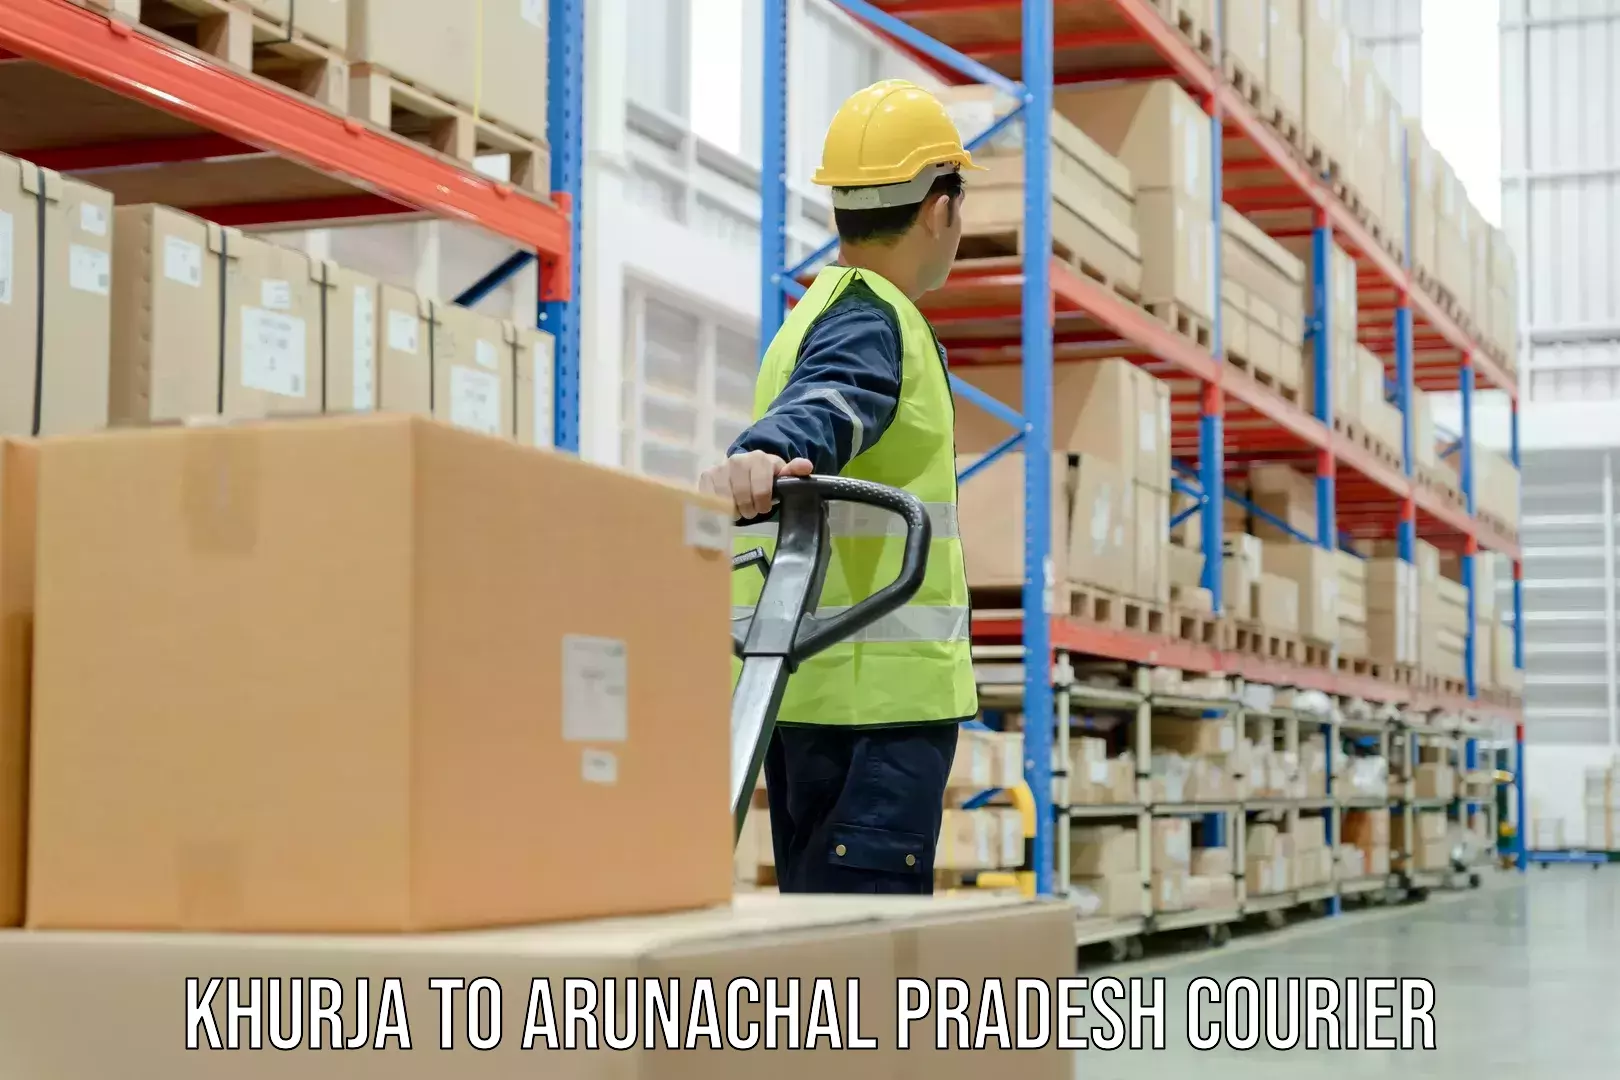 Sustainable delivery practices Khurja to Arunachal Pradesh